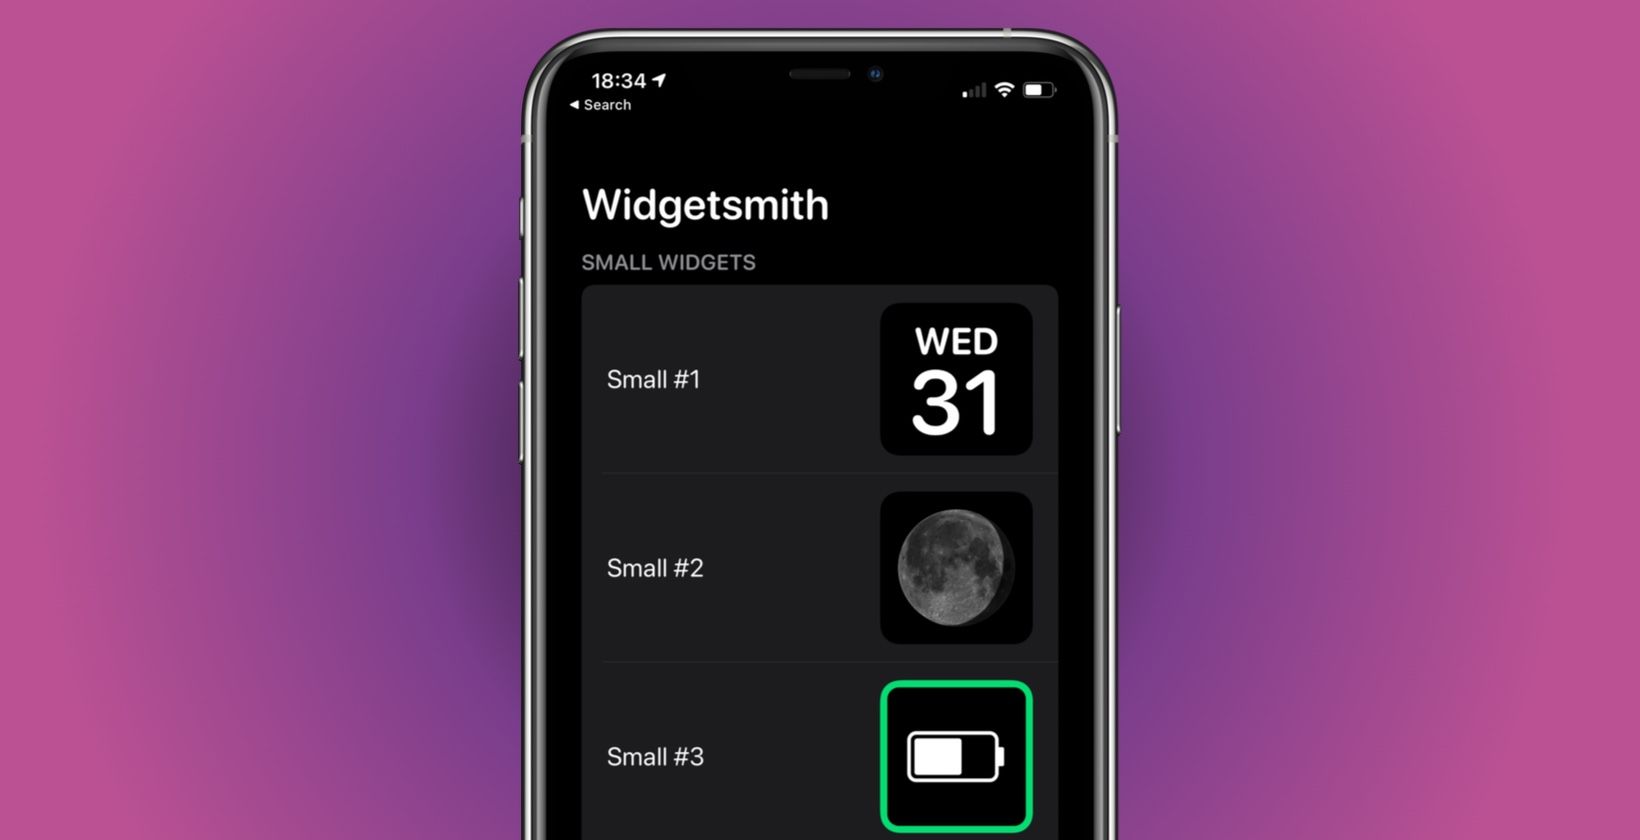 Widgetsmith lets you quickly create custom iPhone widgets